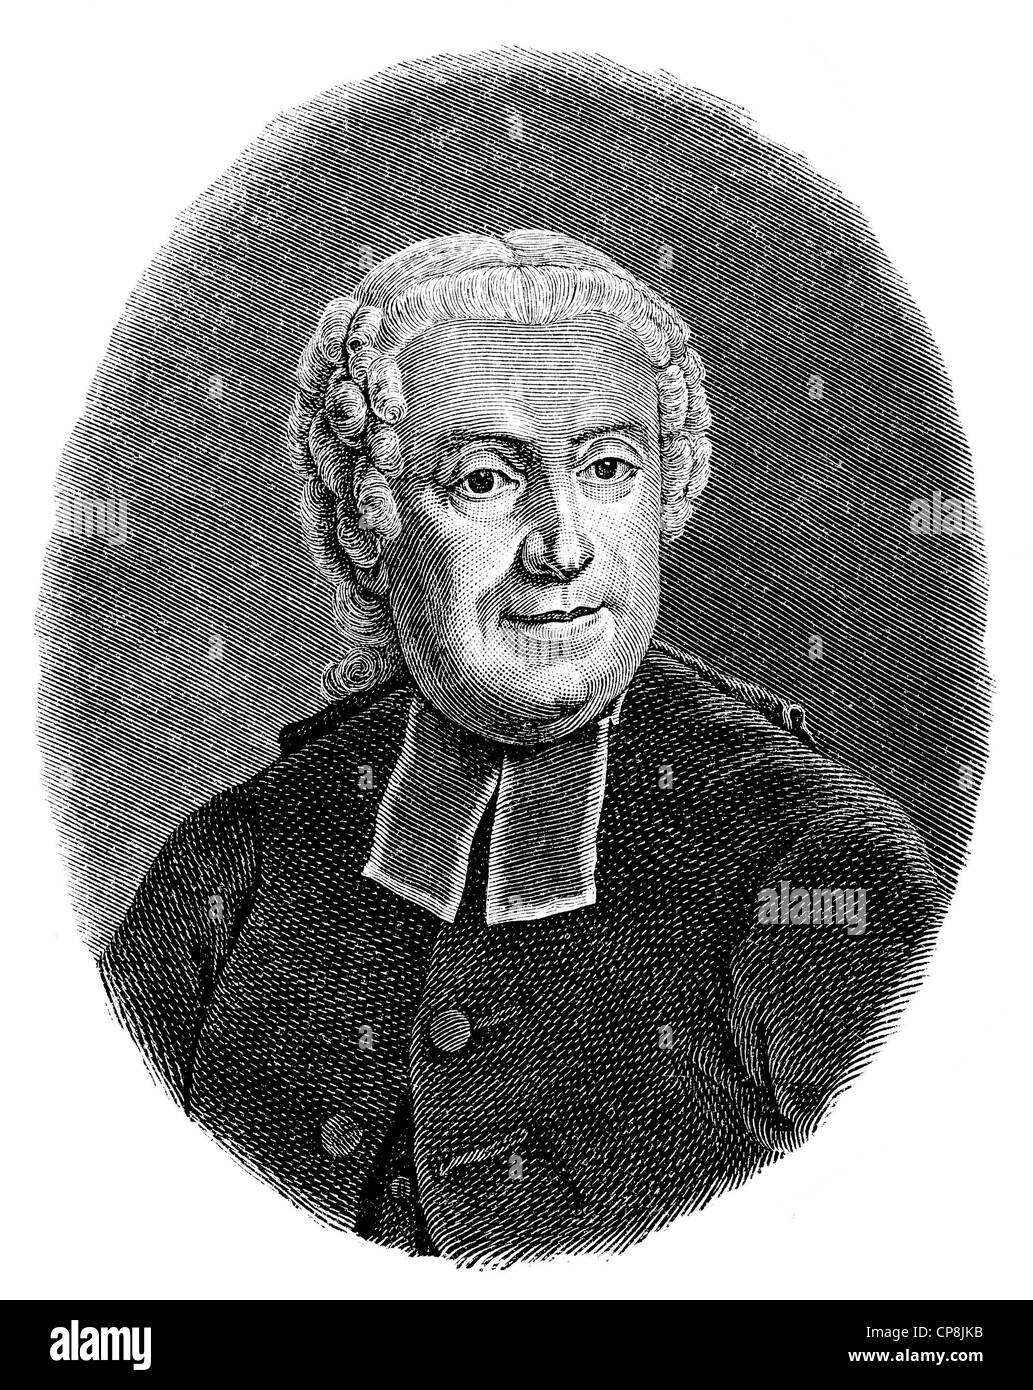 Pietro Metastasio or Pietro Antonio Domenico Bonaventura Trapassi, 1698 - 1782, an Italian poet, librettist, playwright and prie Stock Photo